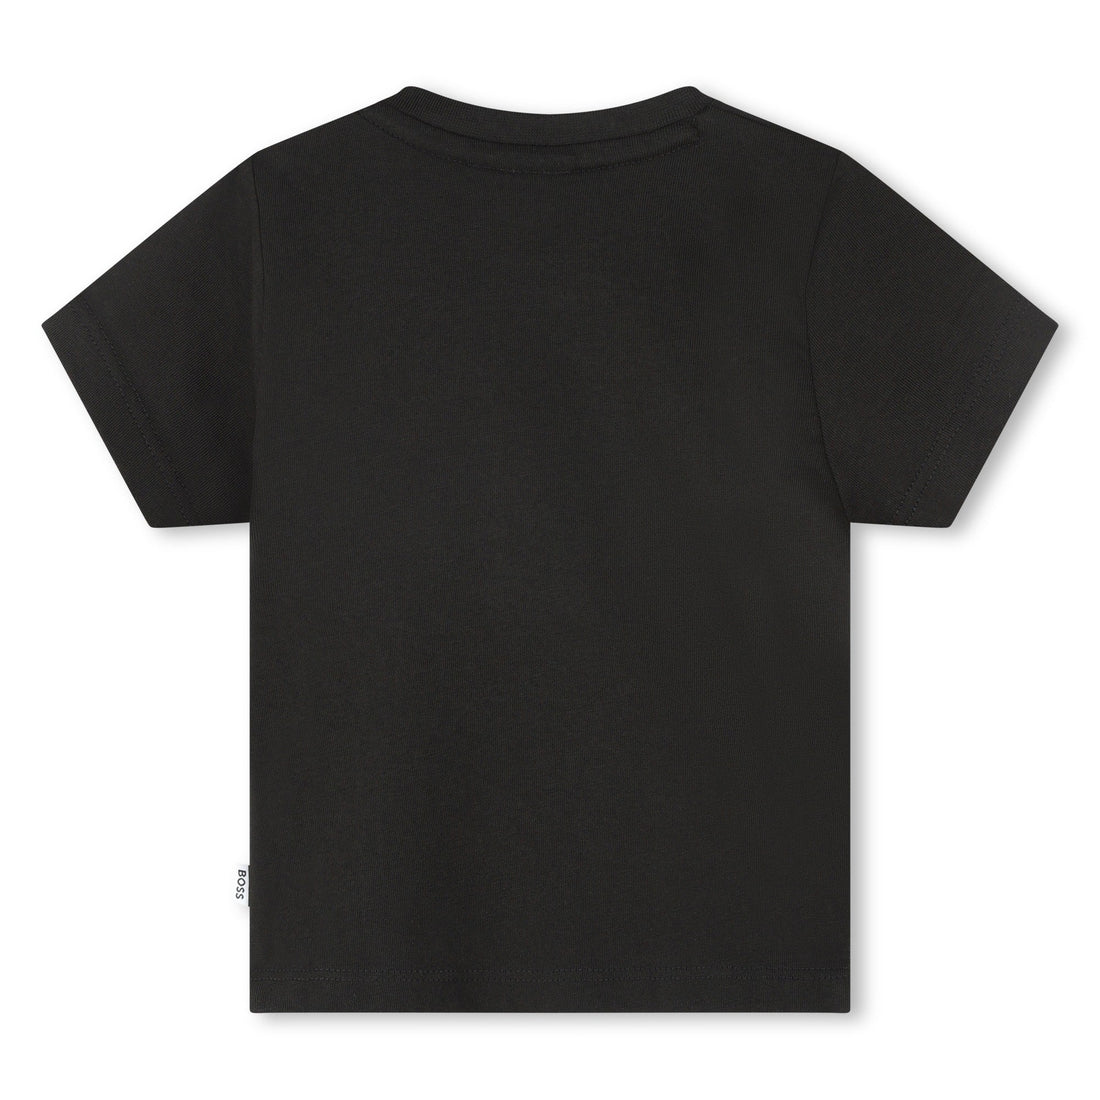 Camiseta Negra Manga Corta Estampado BOSS Bebé